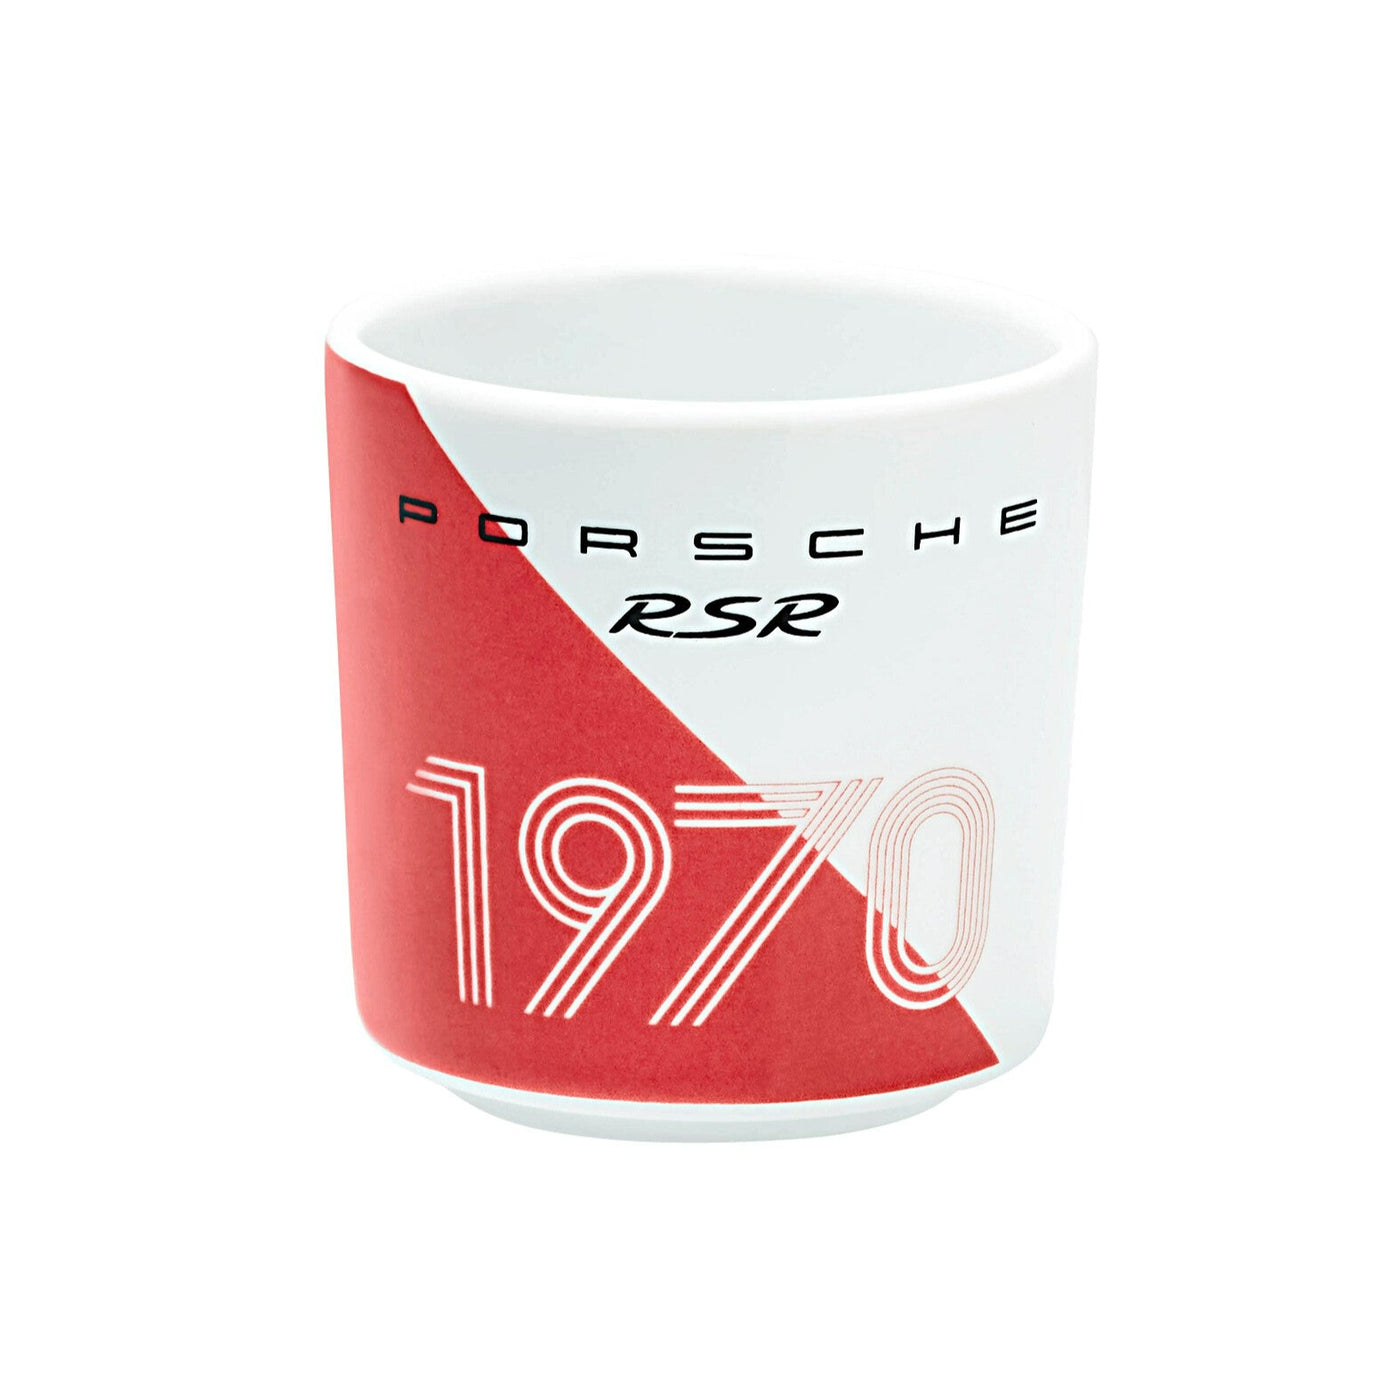 Porsche Espresso Cup - RSR Collection